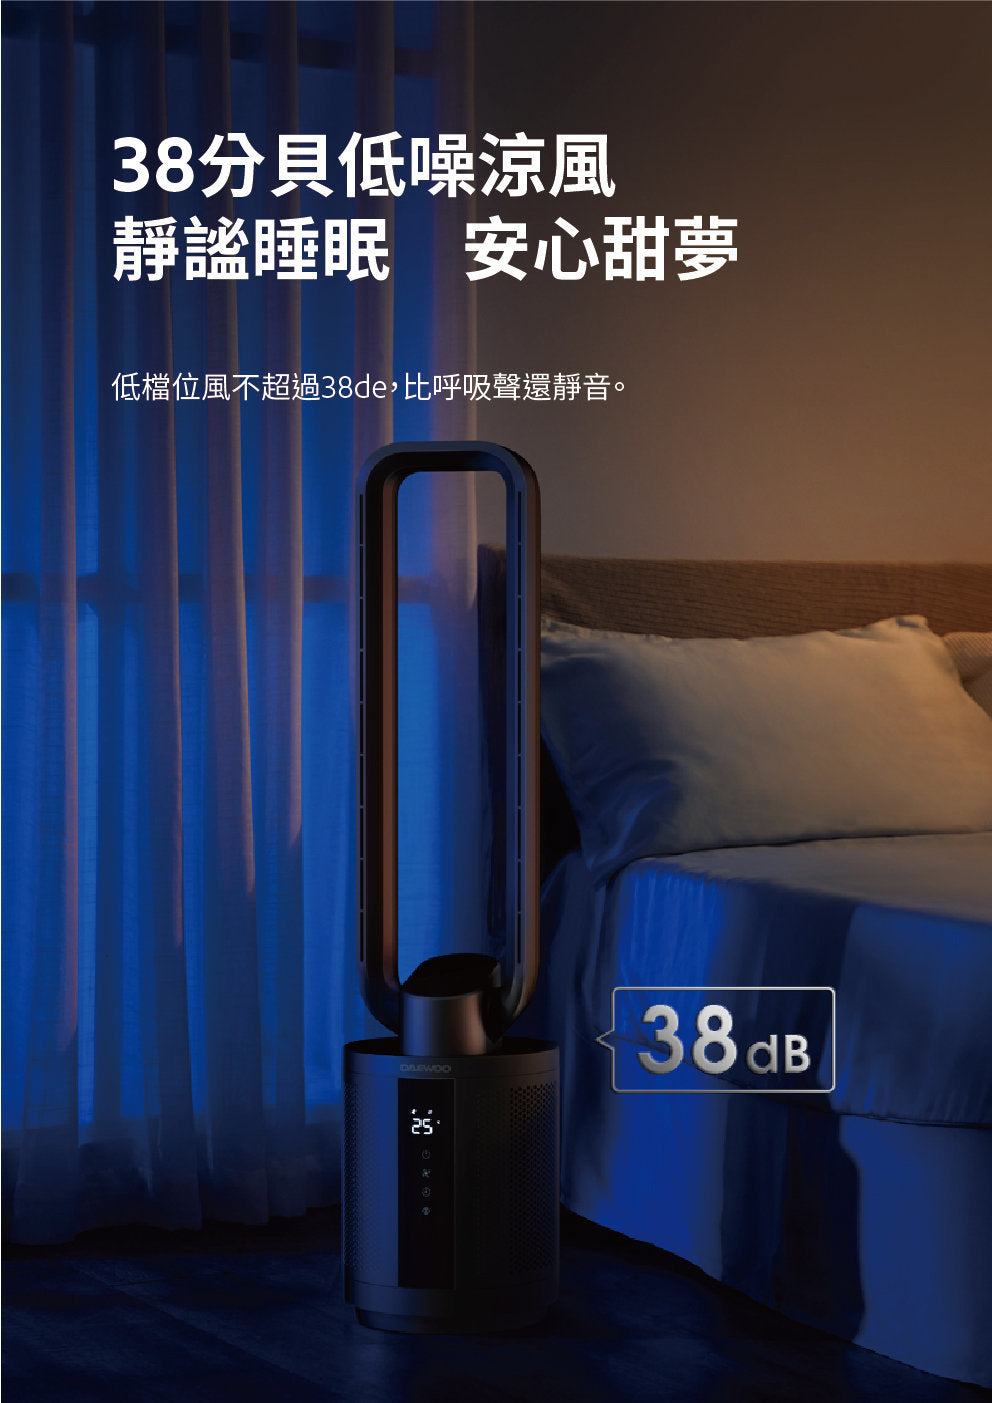 DAEWOO - F9 MAX negative ion air purification bladeless fan [Hong Kong licensed]